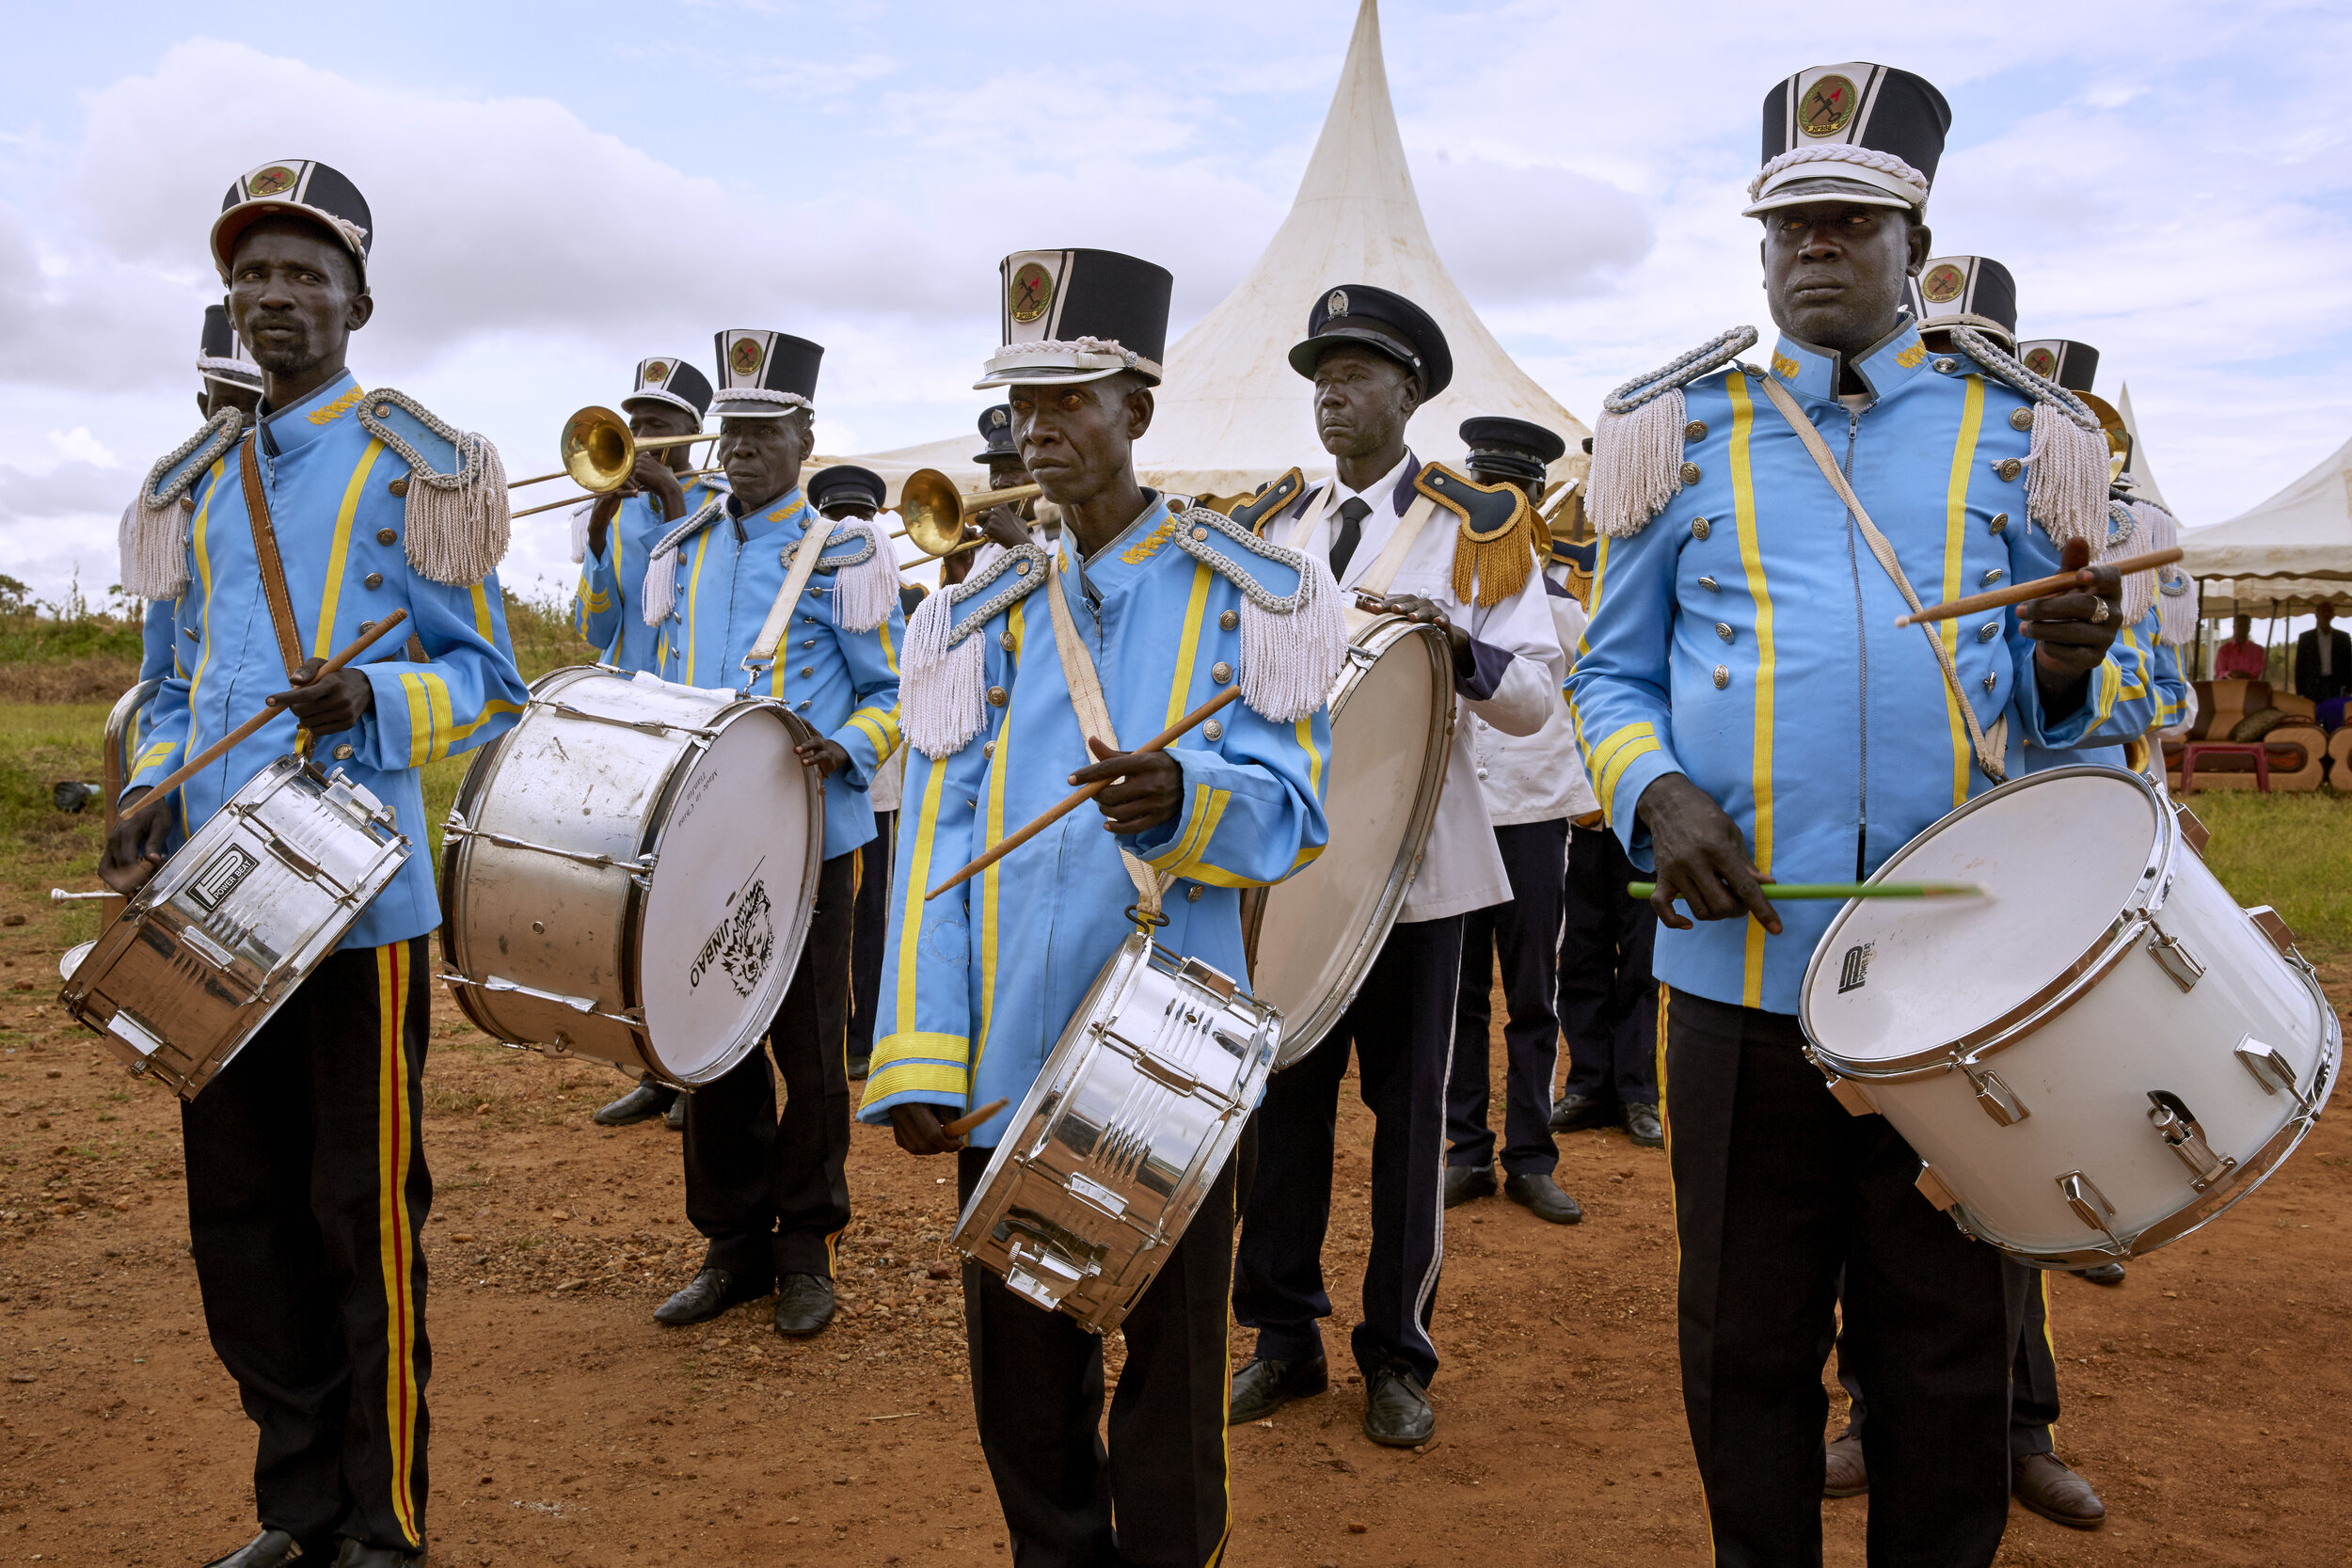 A marching band performs at a barracks near Juba, South Sudan